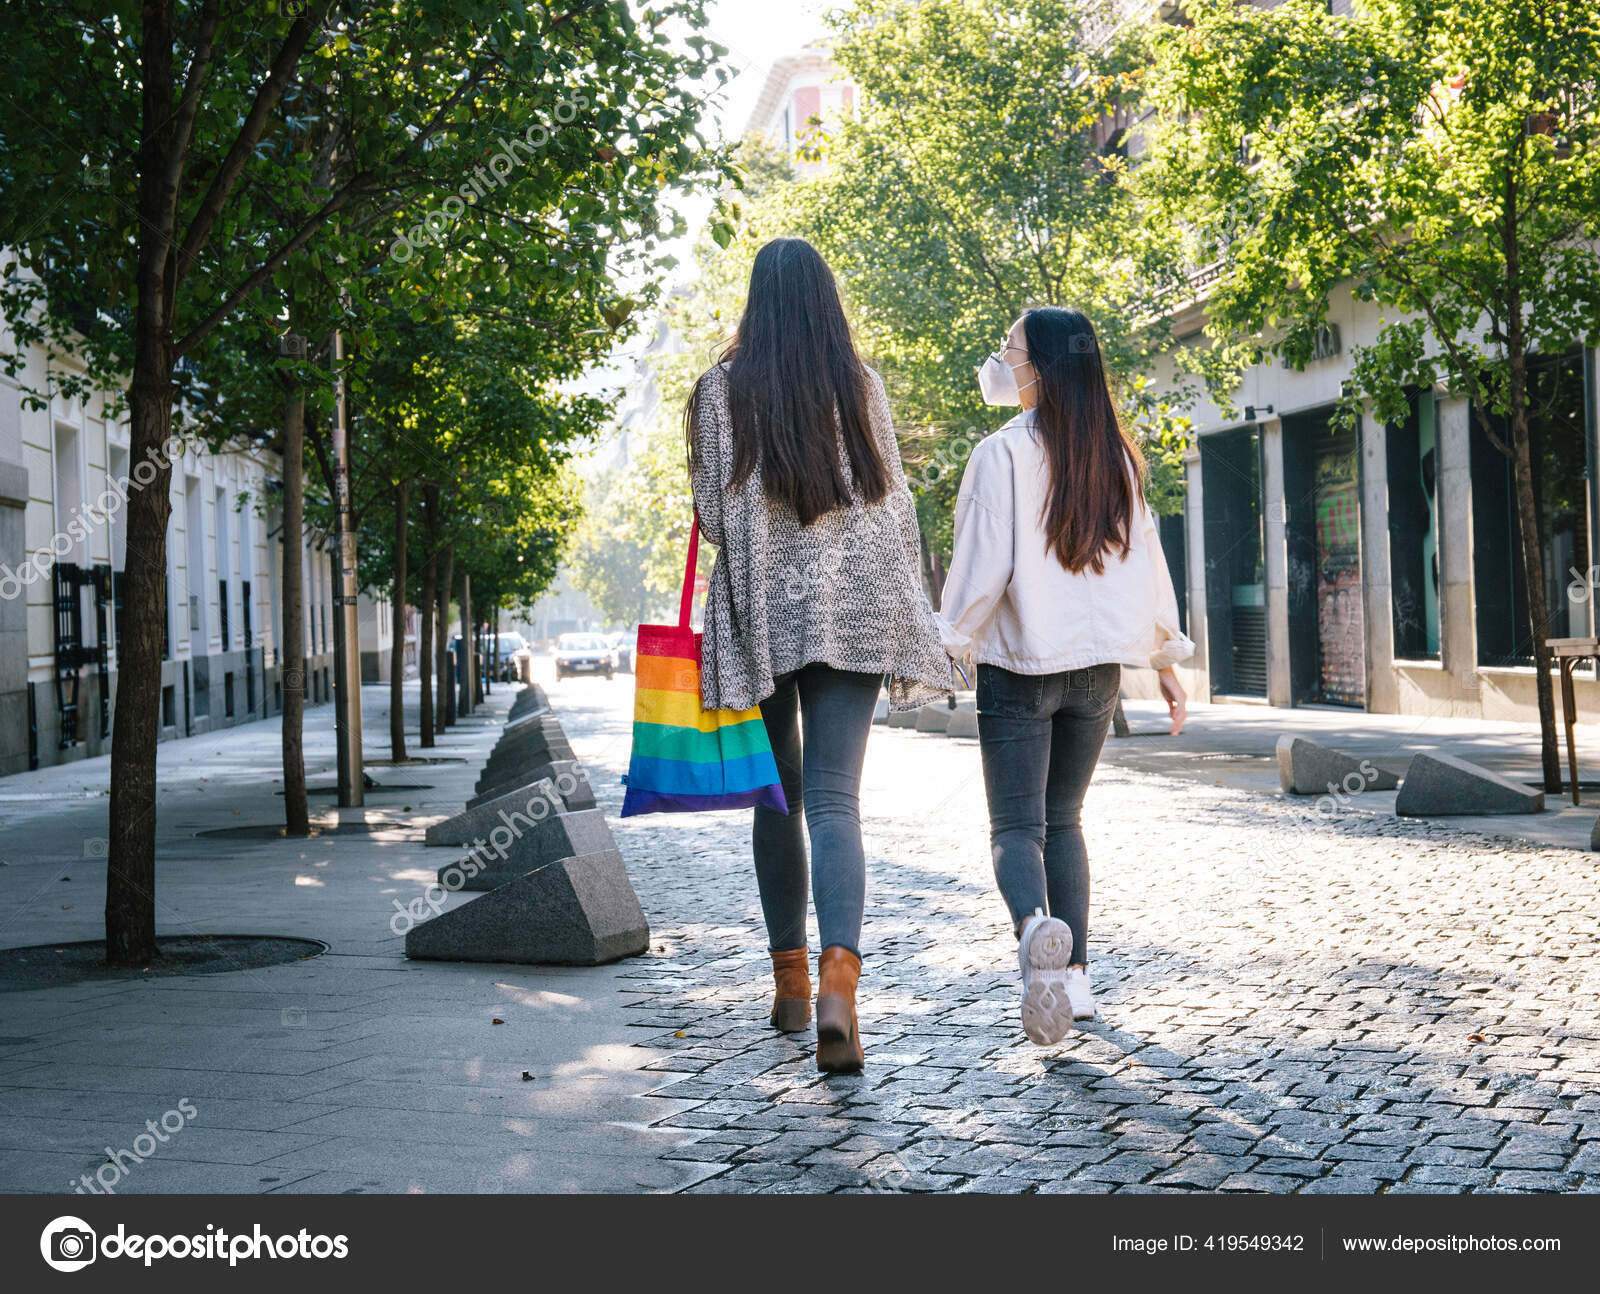 Back View Lesbian Females Rainbow Shopping Bag Holding Hands Walking Stock Photo Image By C Luisbaneres 419549342